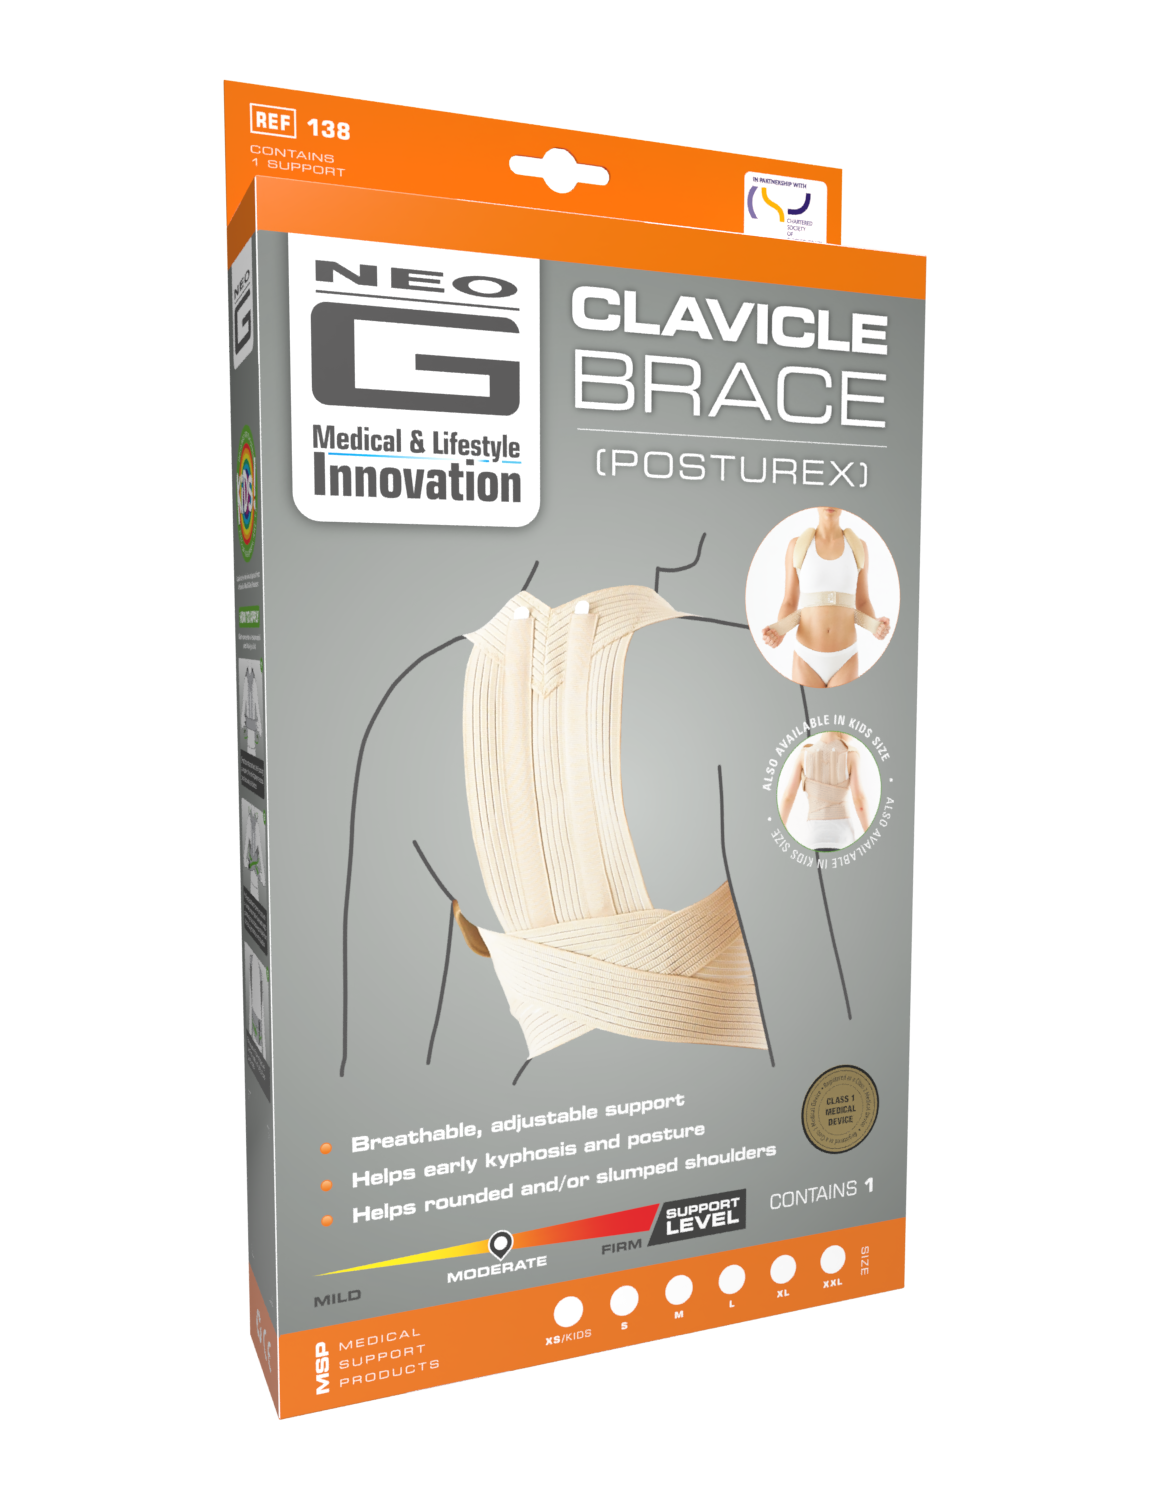 Clavicle Brace (Posturex)